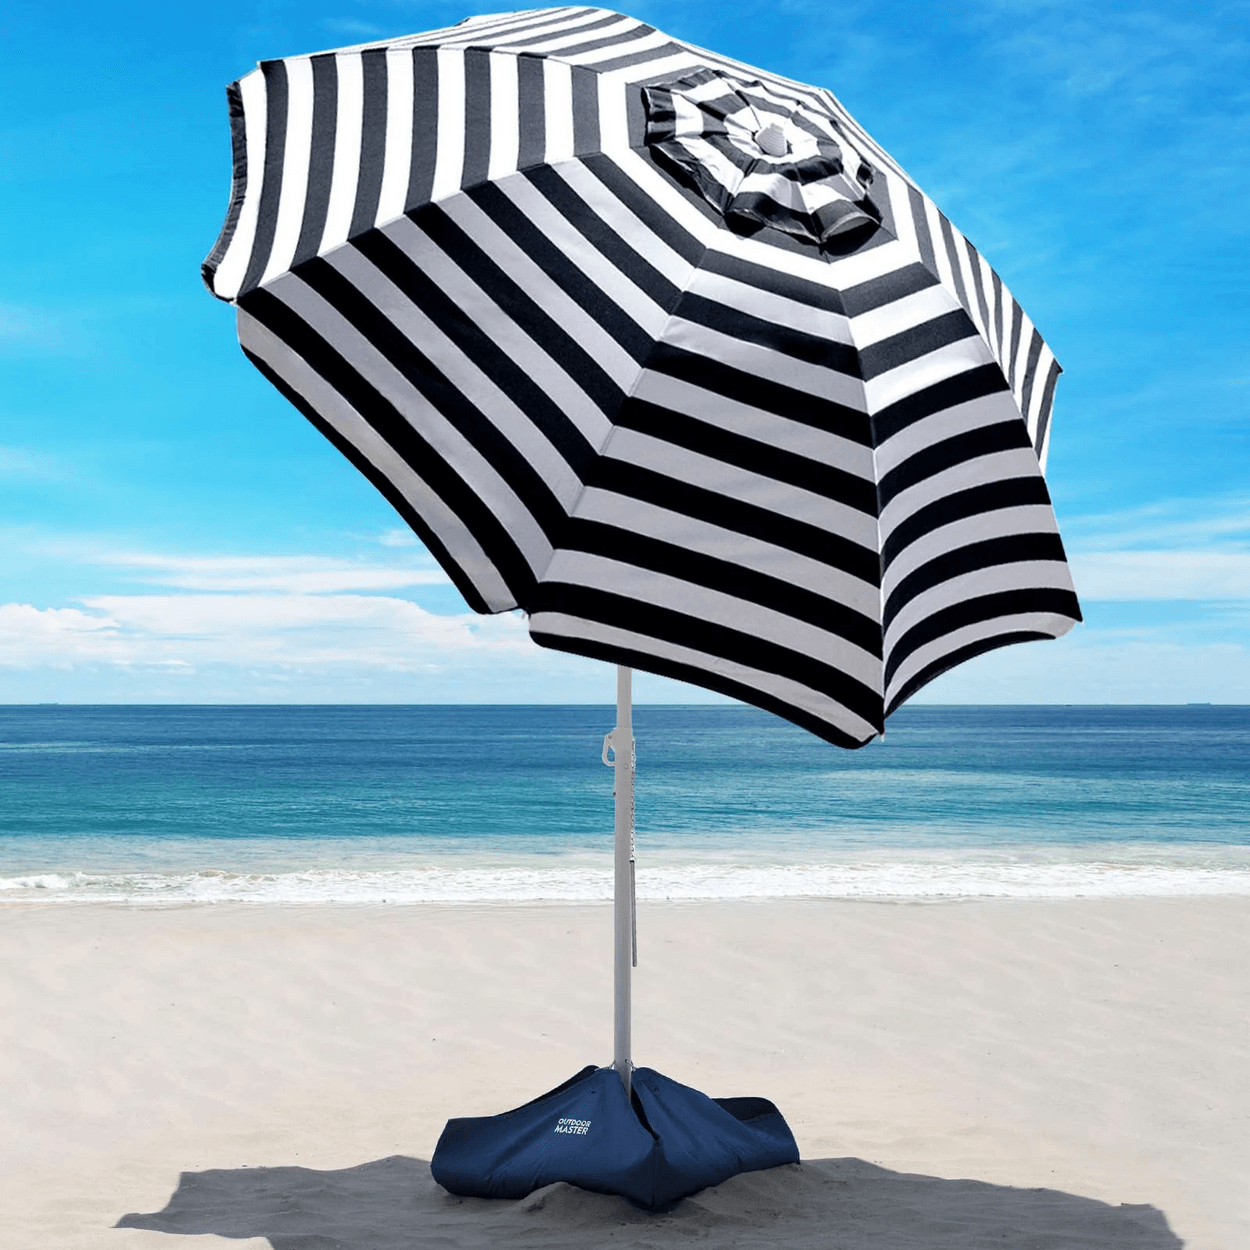 Best beach umbrella for wind resistance OutdoorMaster